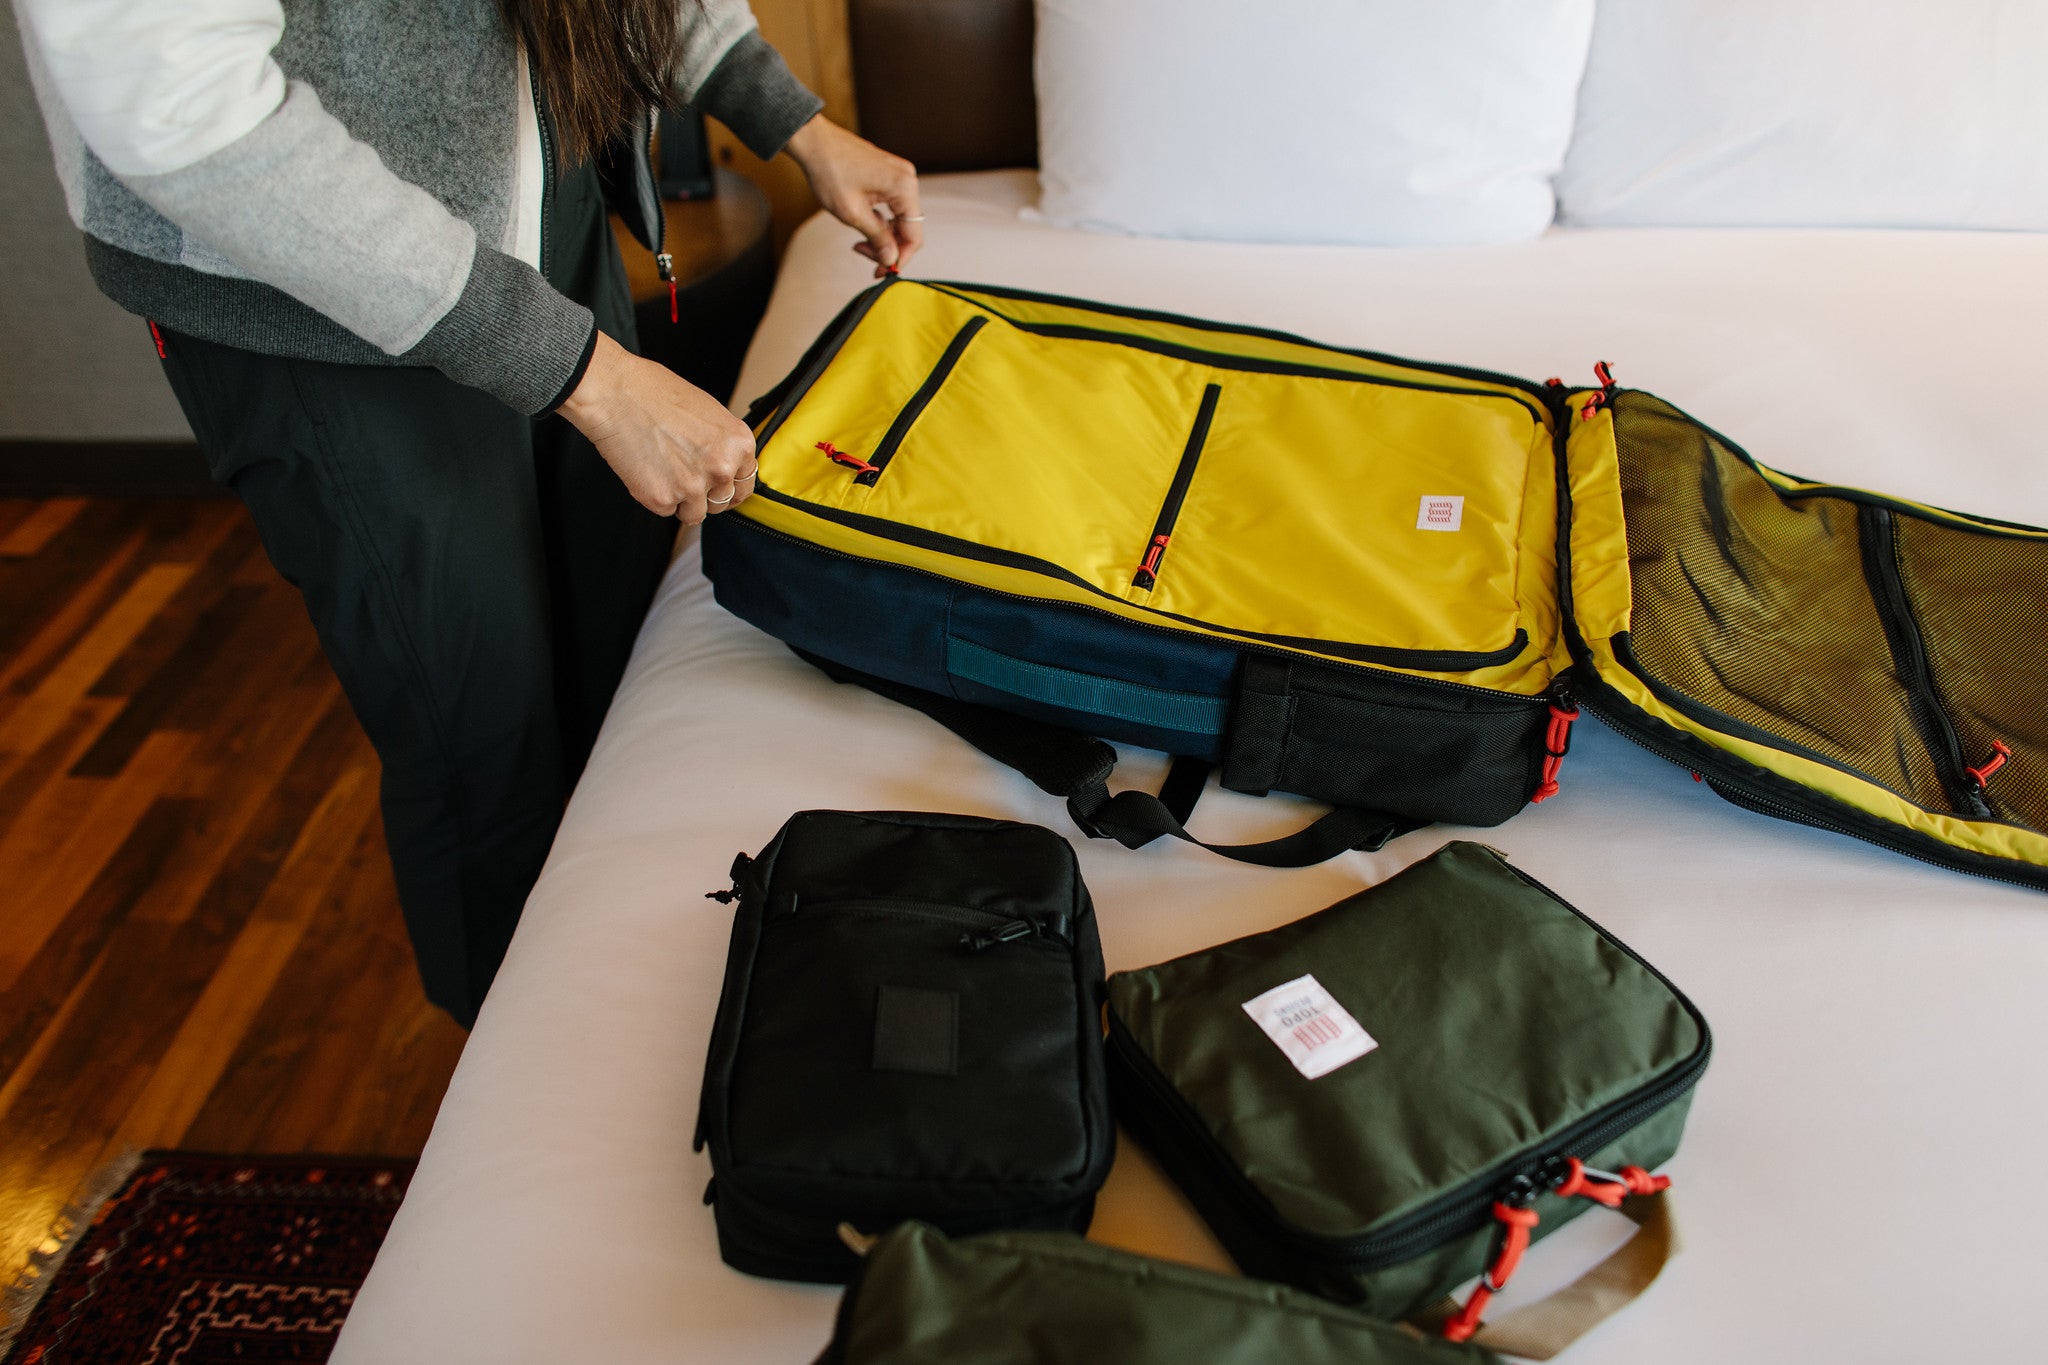 Global Travel Bag 40L | Topo-Designs 